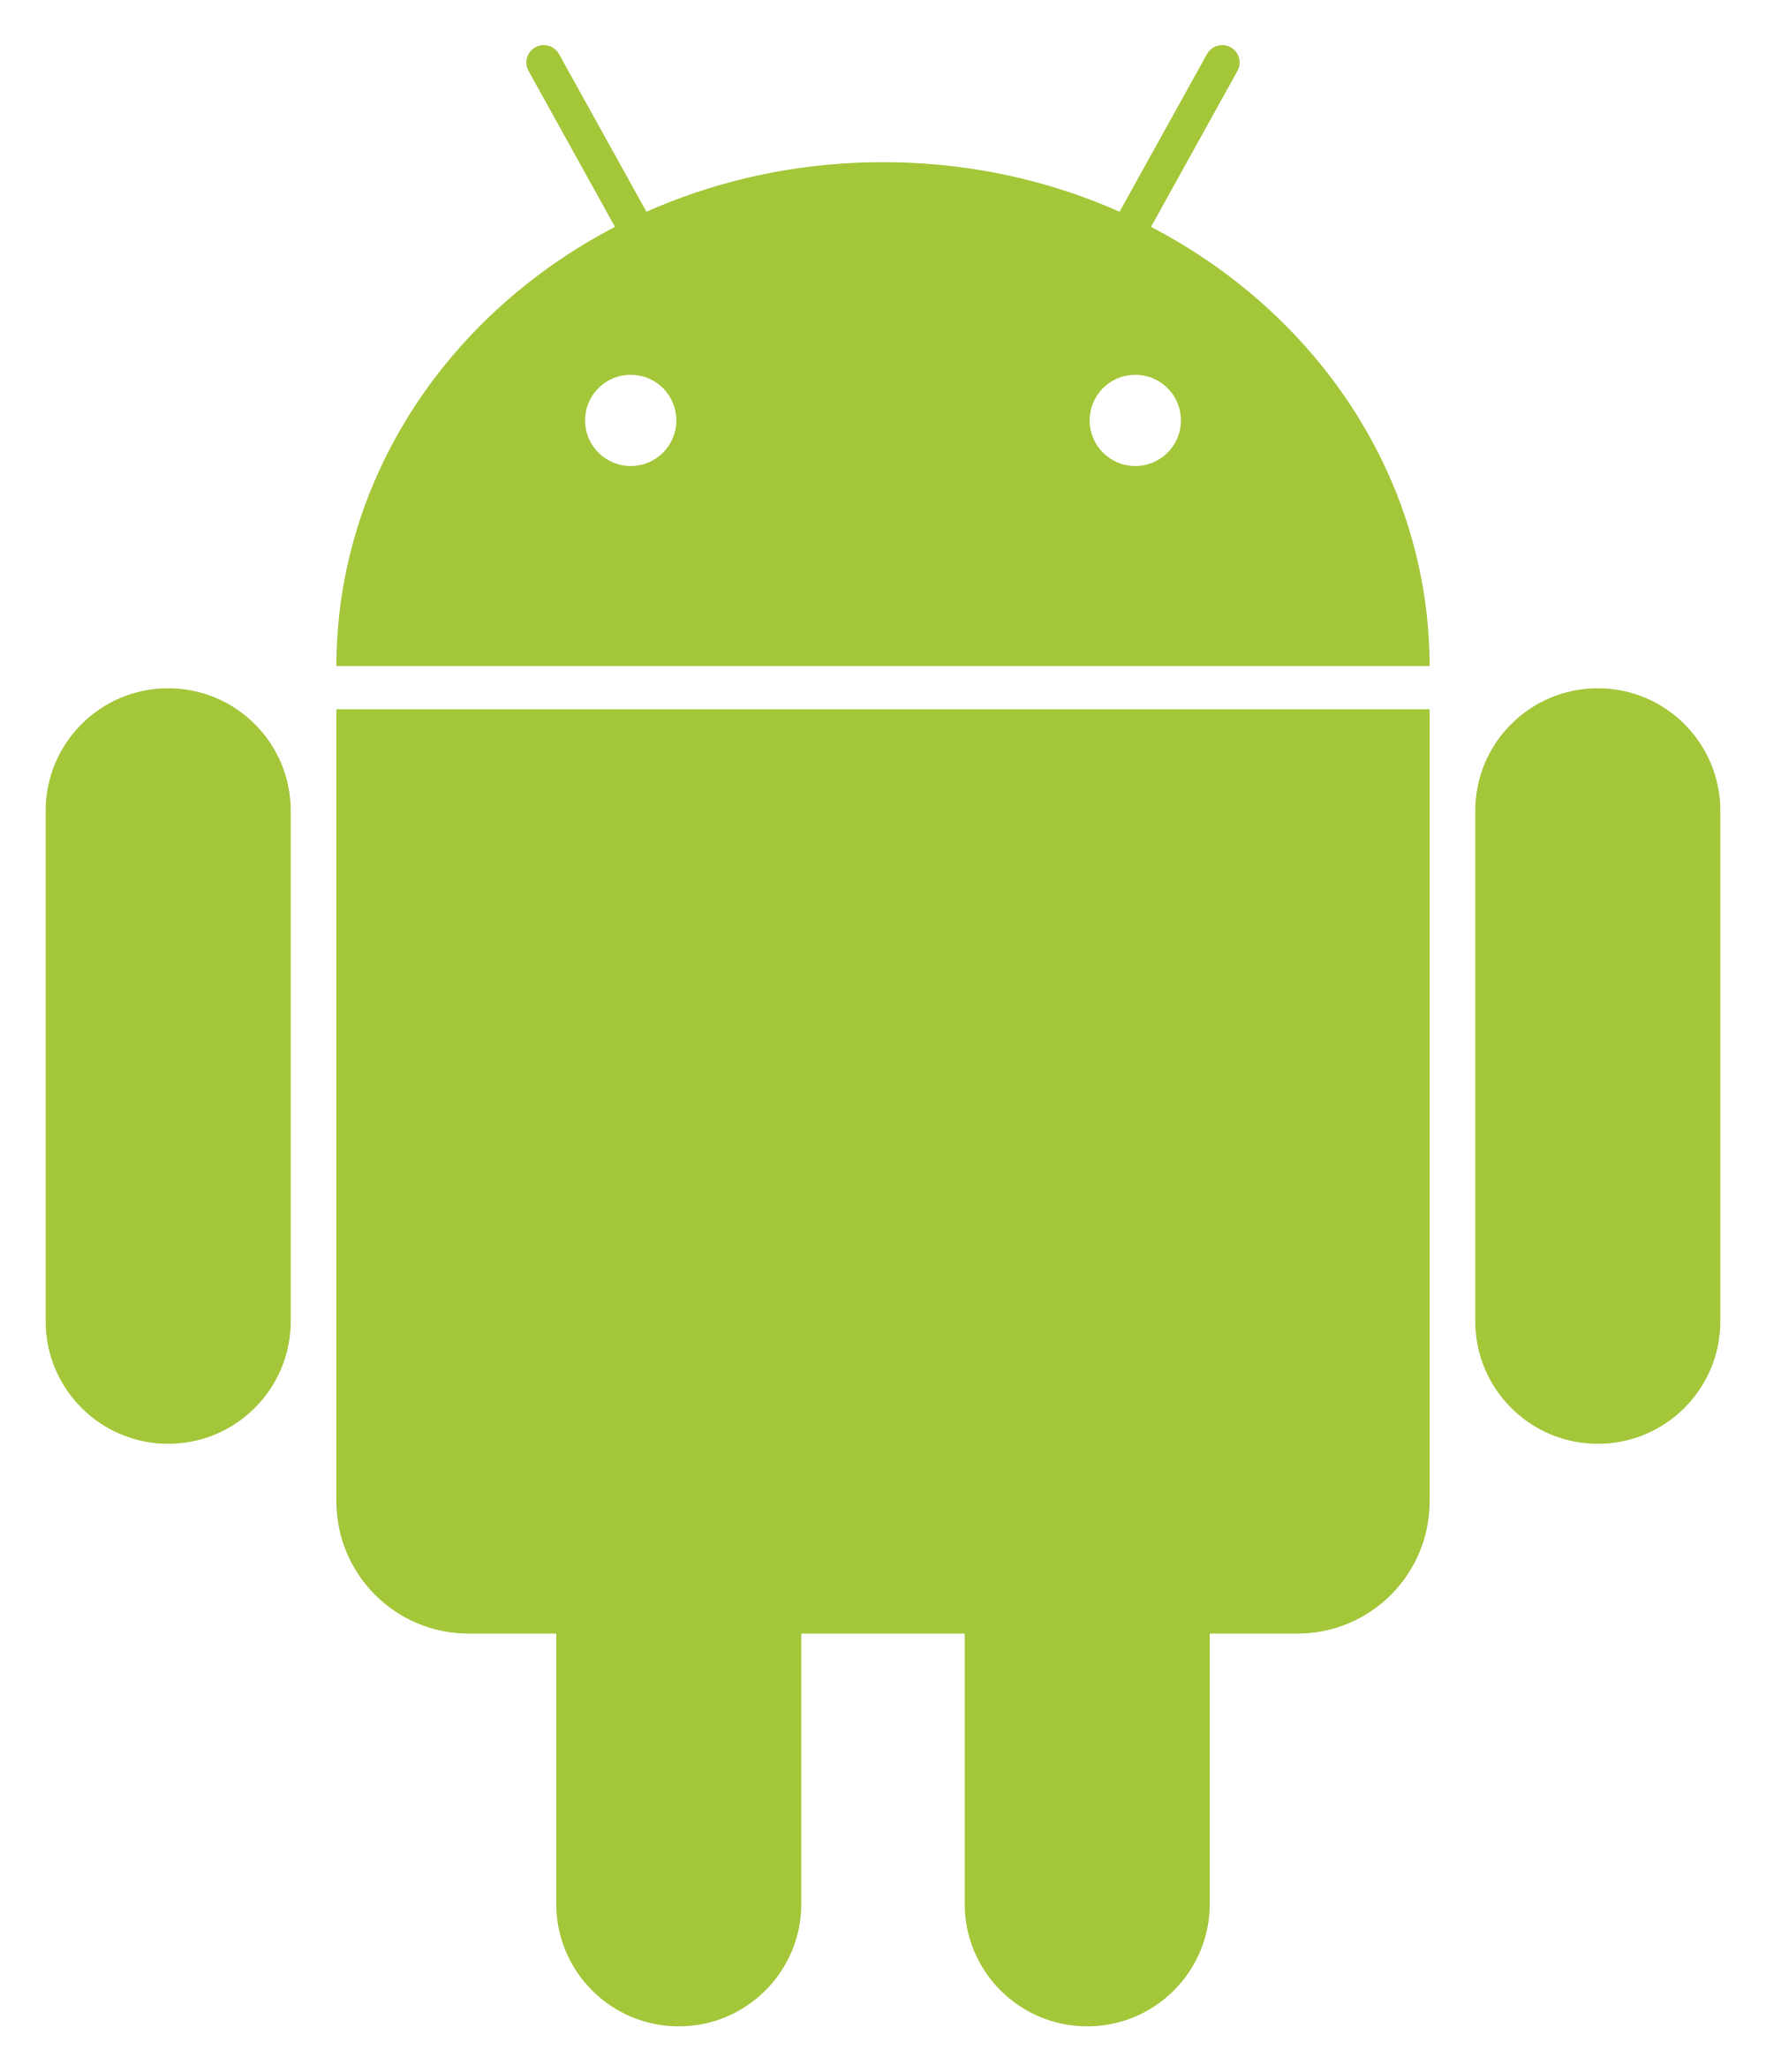 Android Bugdroid Logo